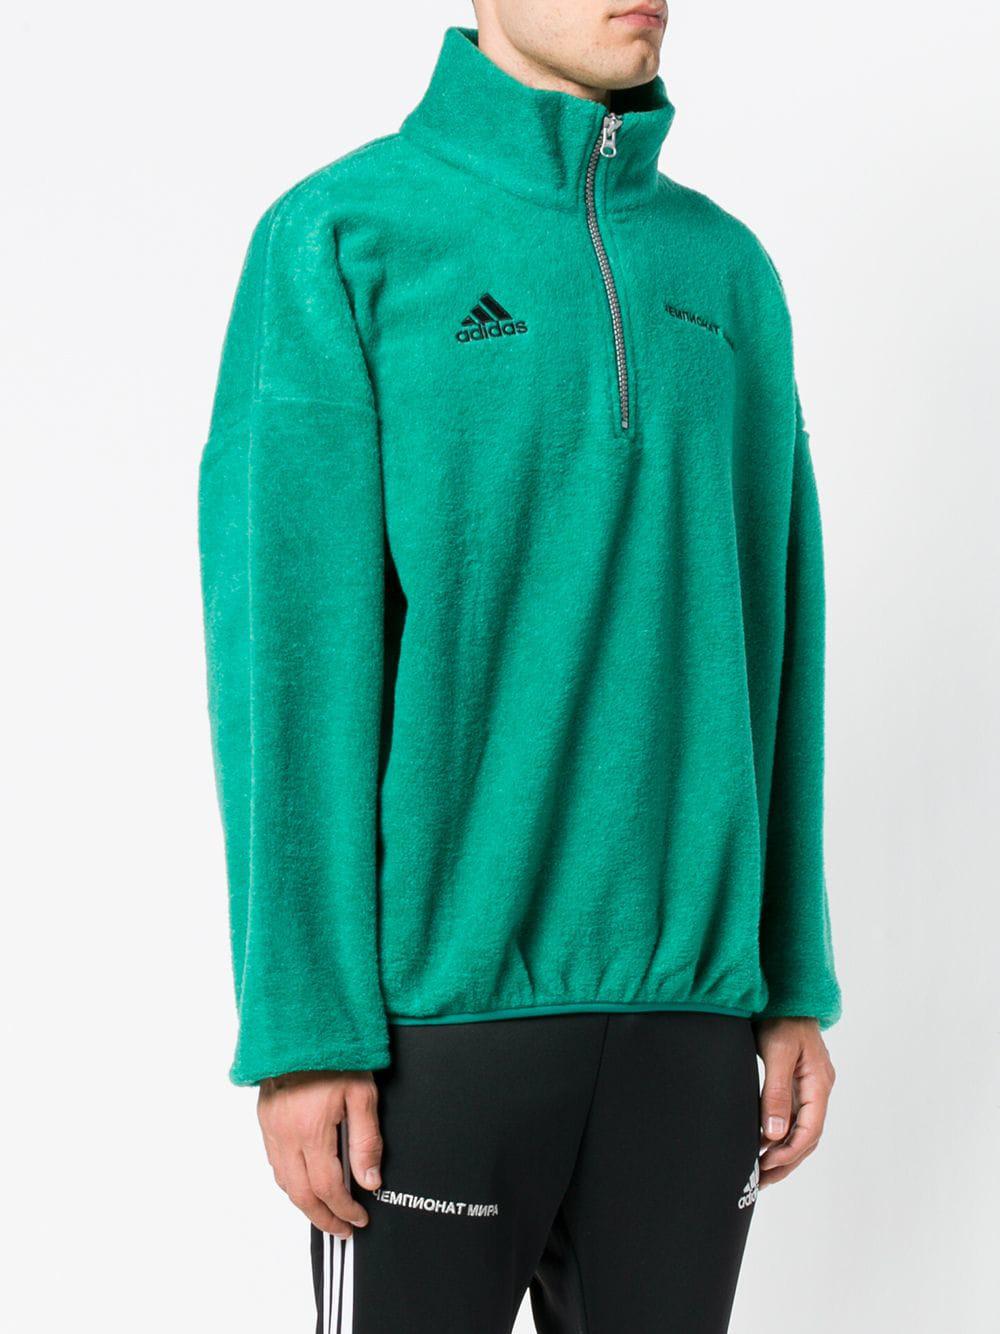 Gosha Rubchinskiy Adidas X Zipped Jumper Green for |